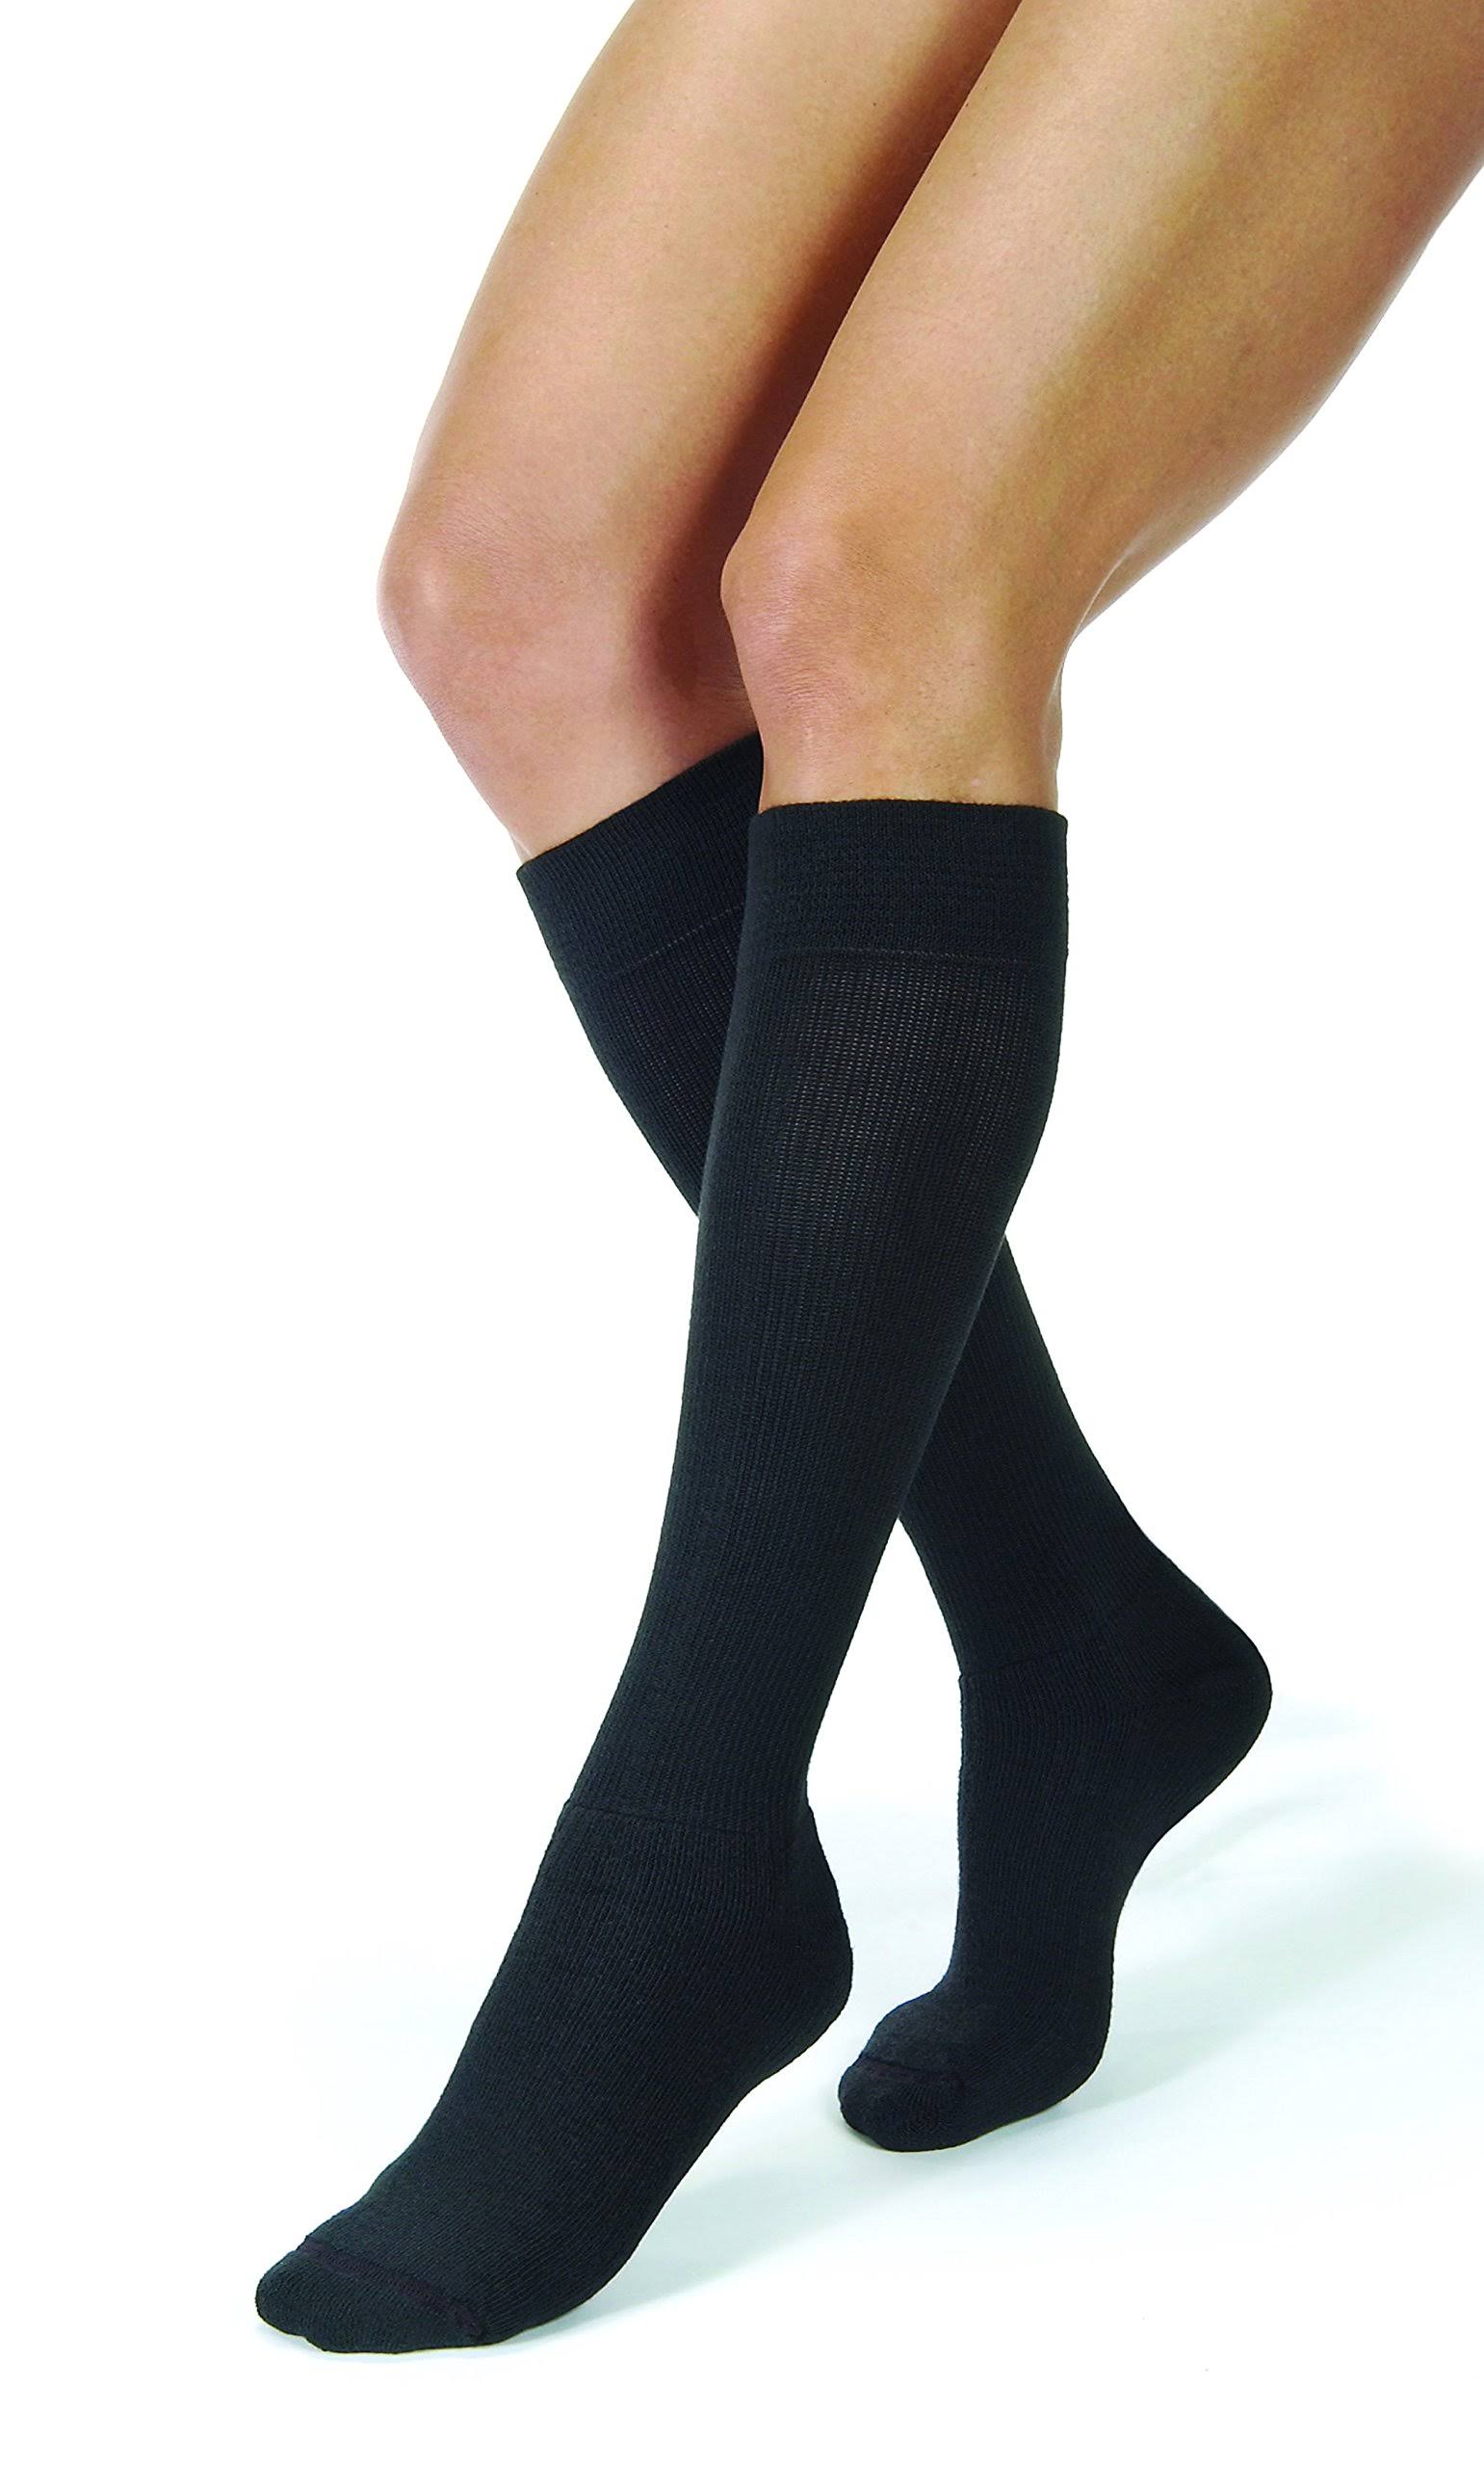 BI110494 - Bsn Jobst JOBST ActiveWear Knee-High Firm Compression Socks - Medium, Cool Black